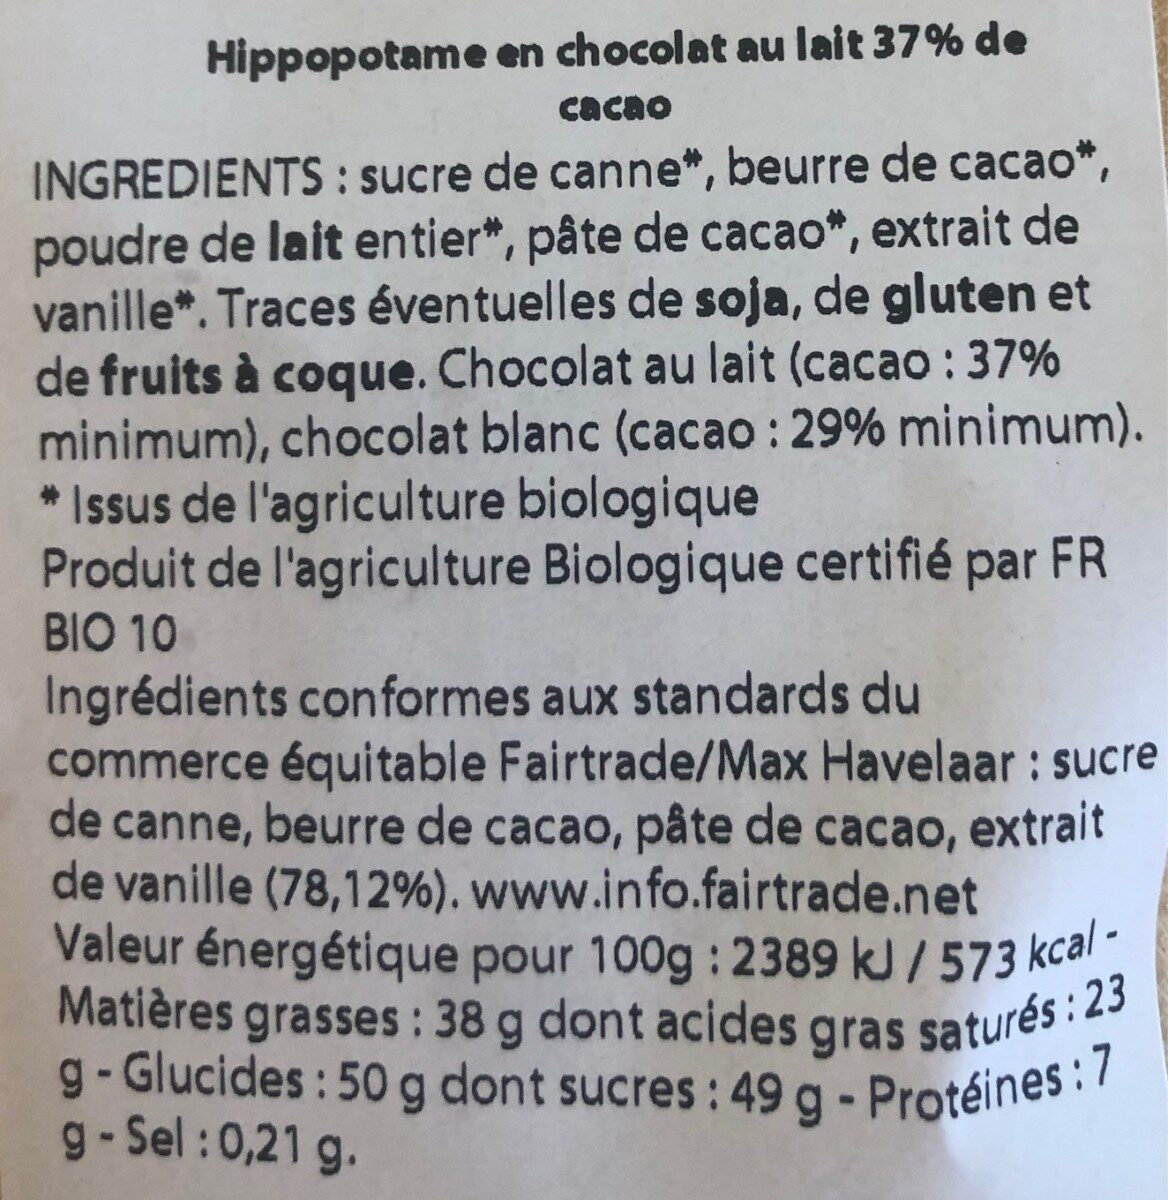 Hippopotame en chocolat - Ingrédients